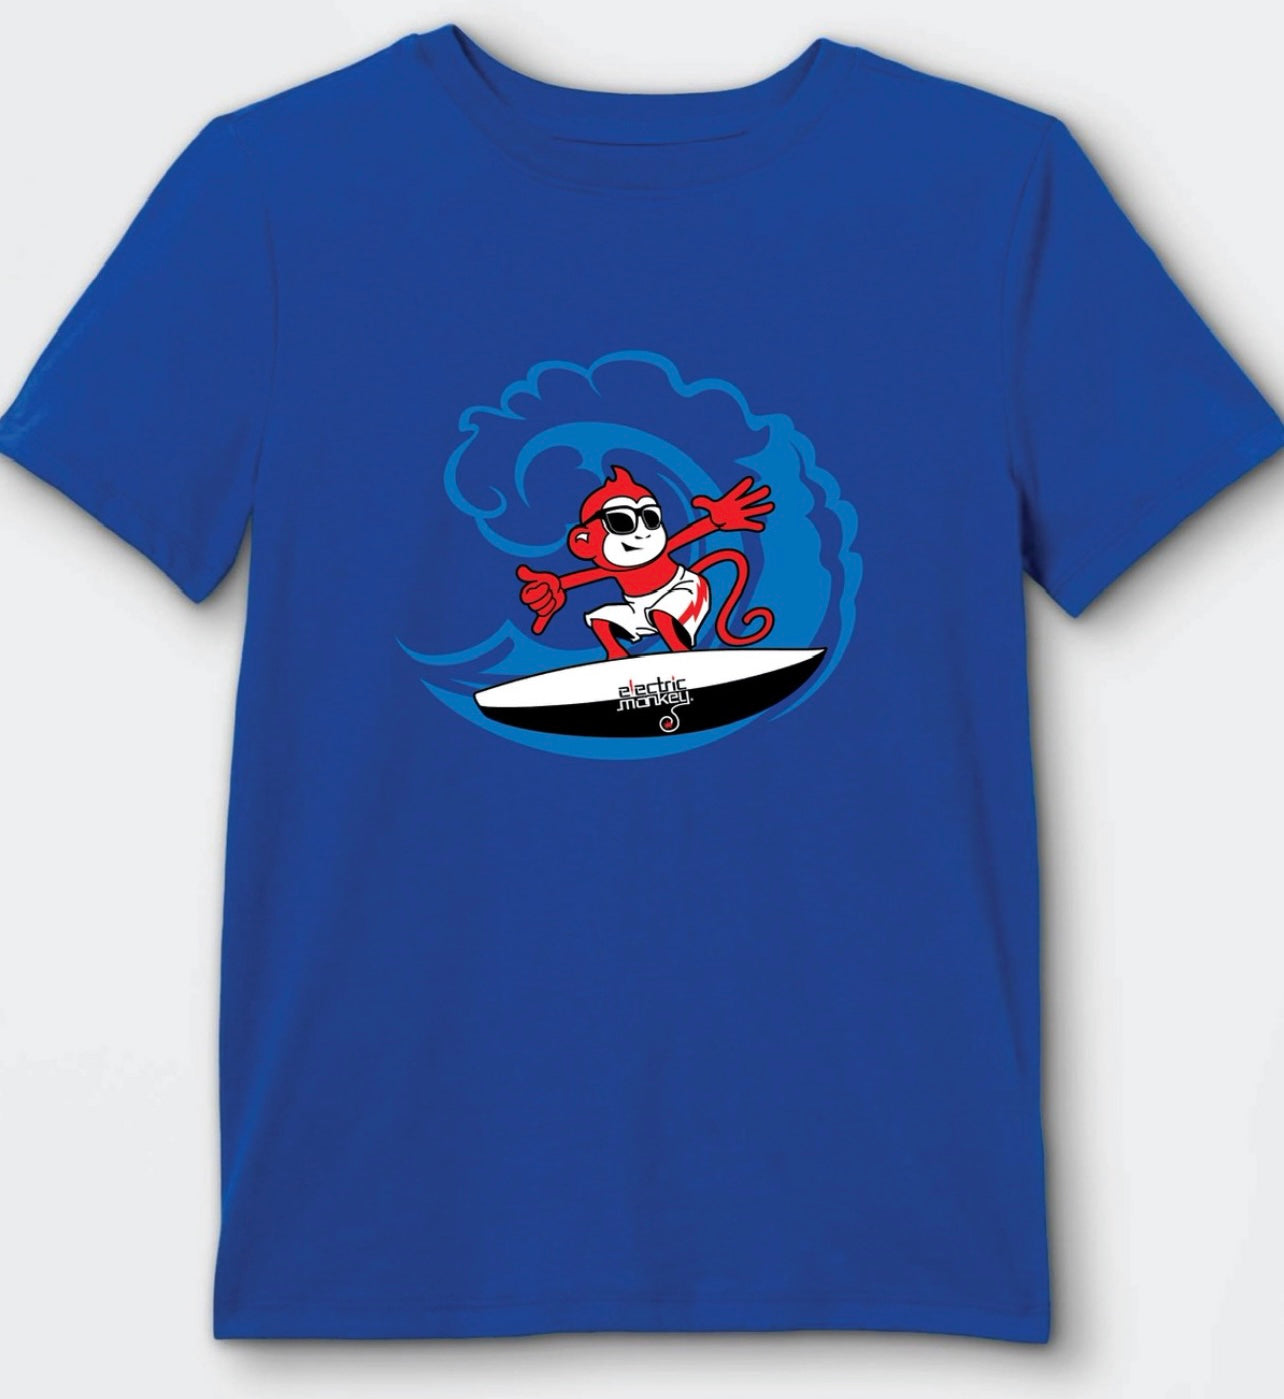 Surfing Electric Monkey Soft Kids Tee Shirt